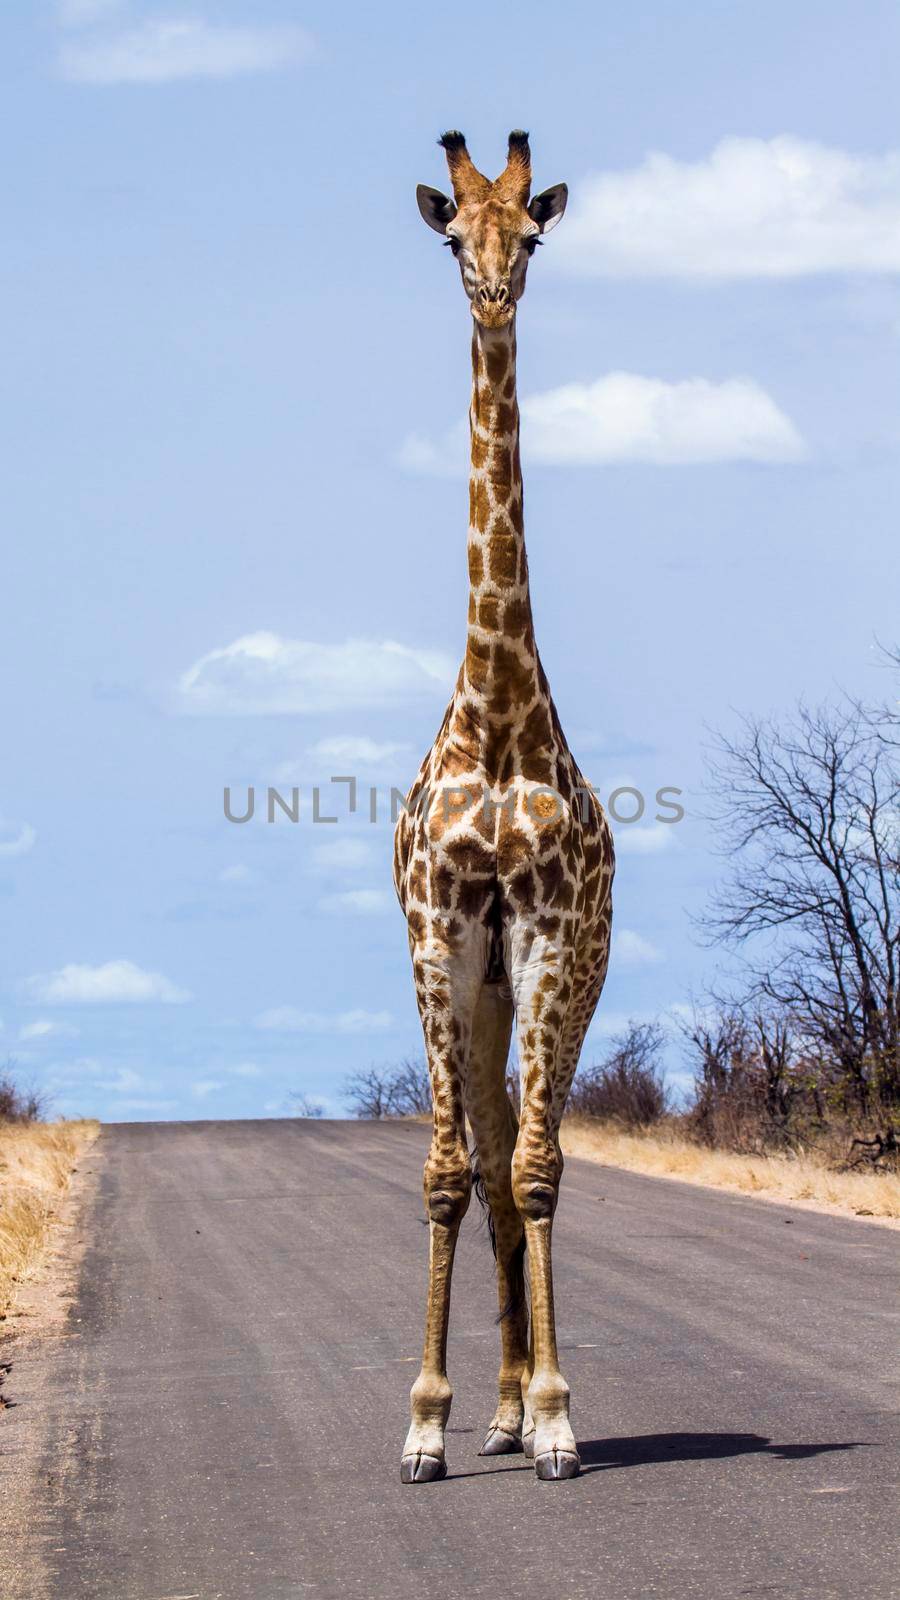 Specie Giraffa camelopardalis family of Giraffidae